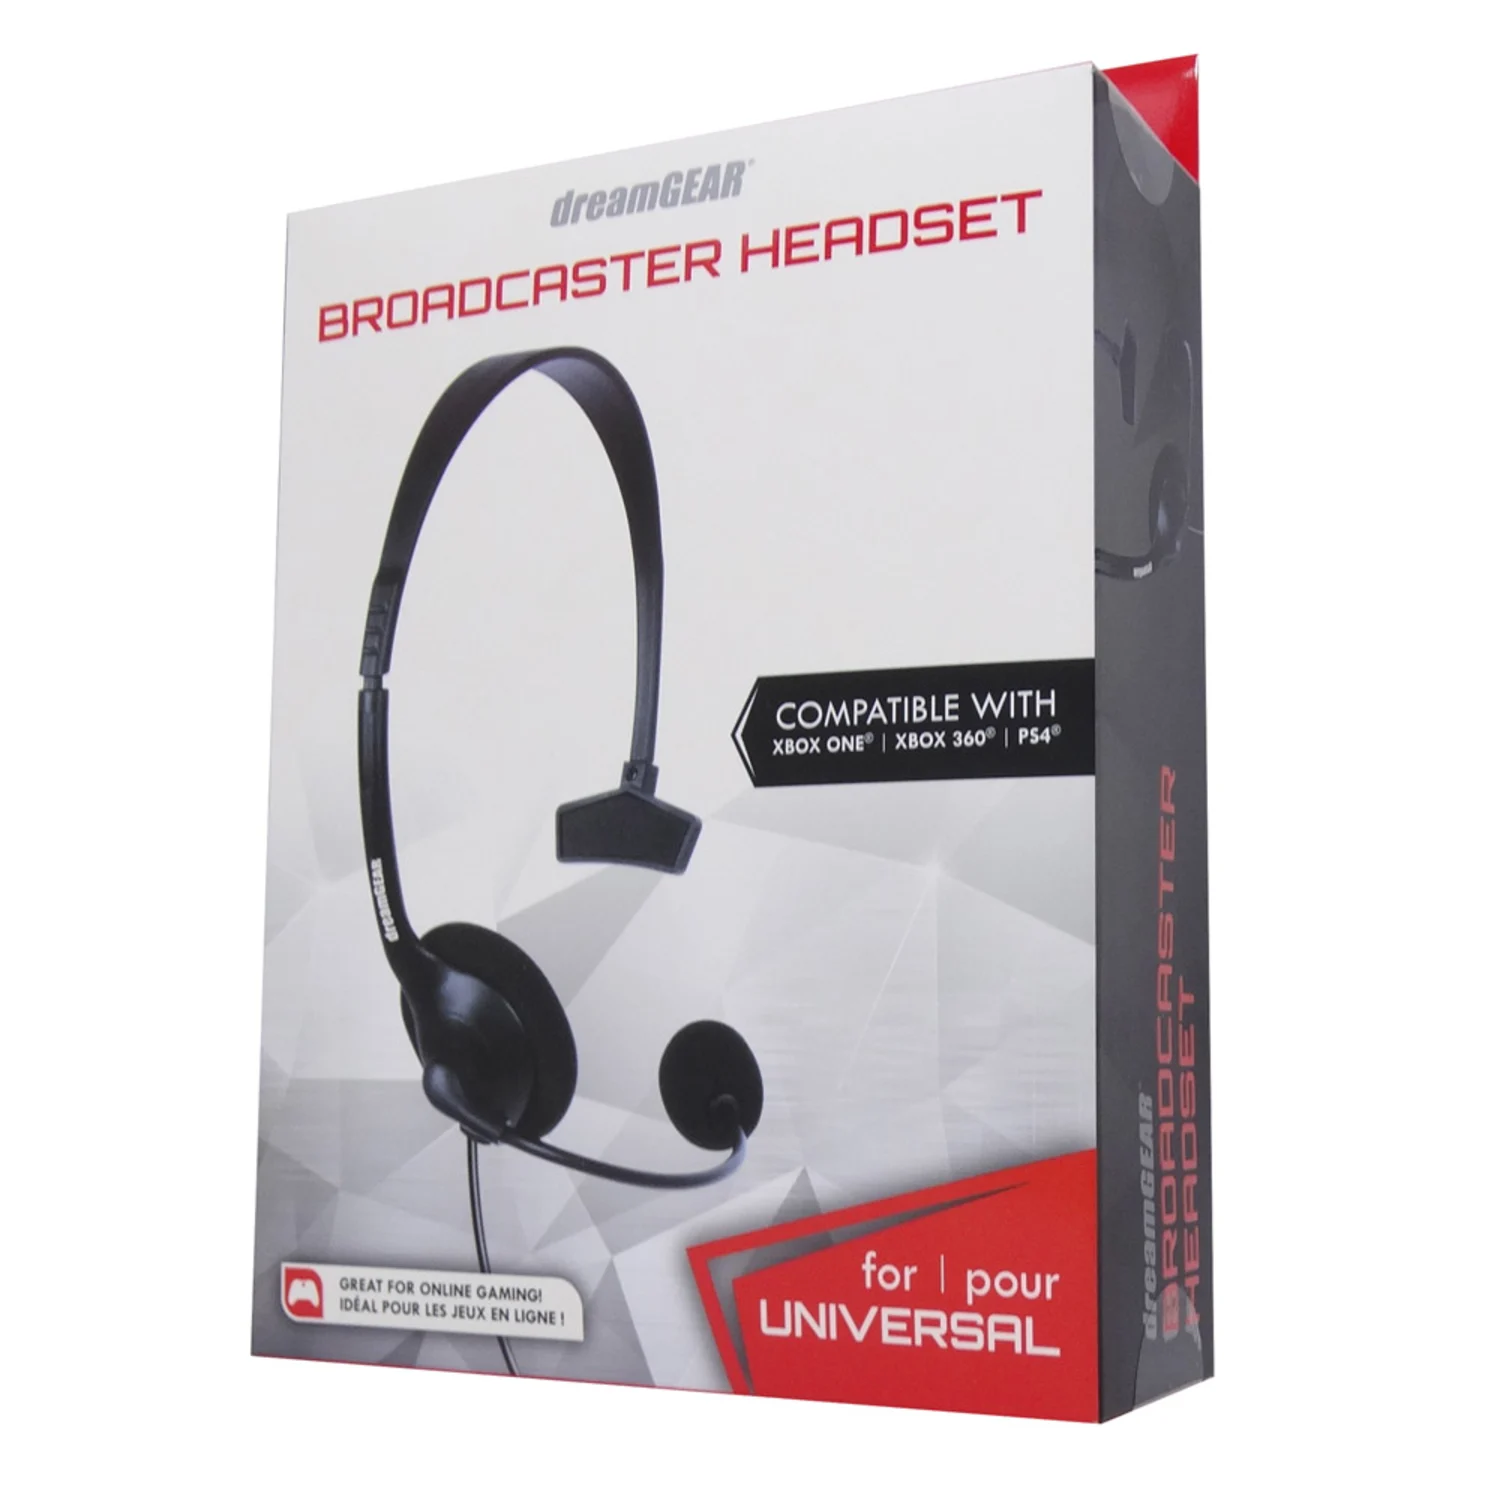 Headset Broadcaster Dreamgear universal PS4 / Xbox one / Xbox 360 / Nintendo Switch - preto (6409)